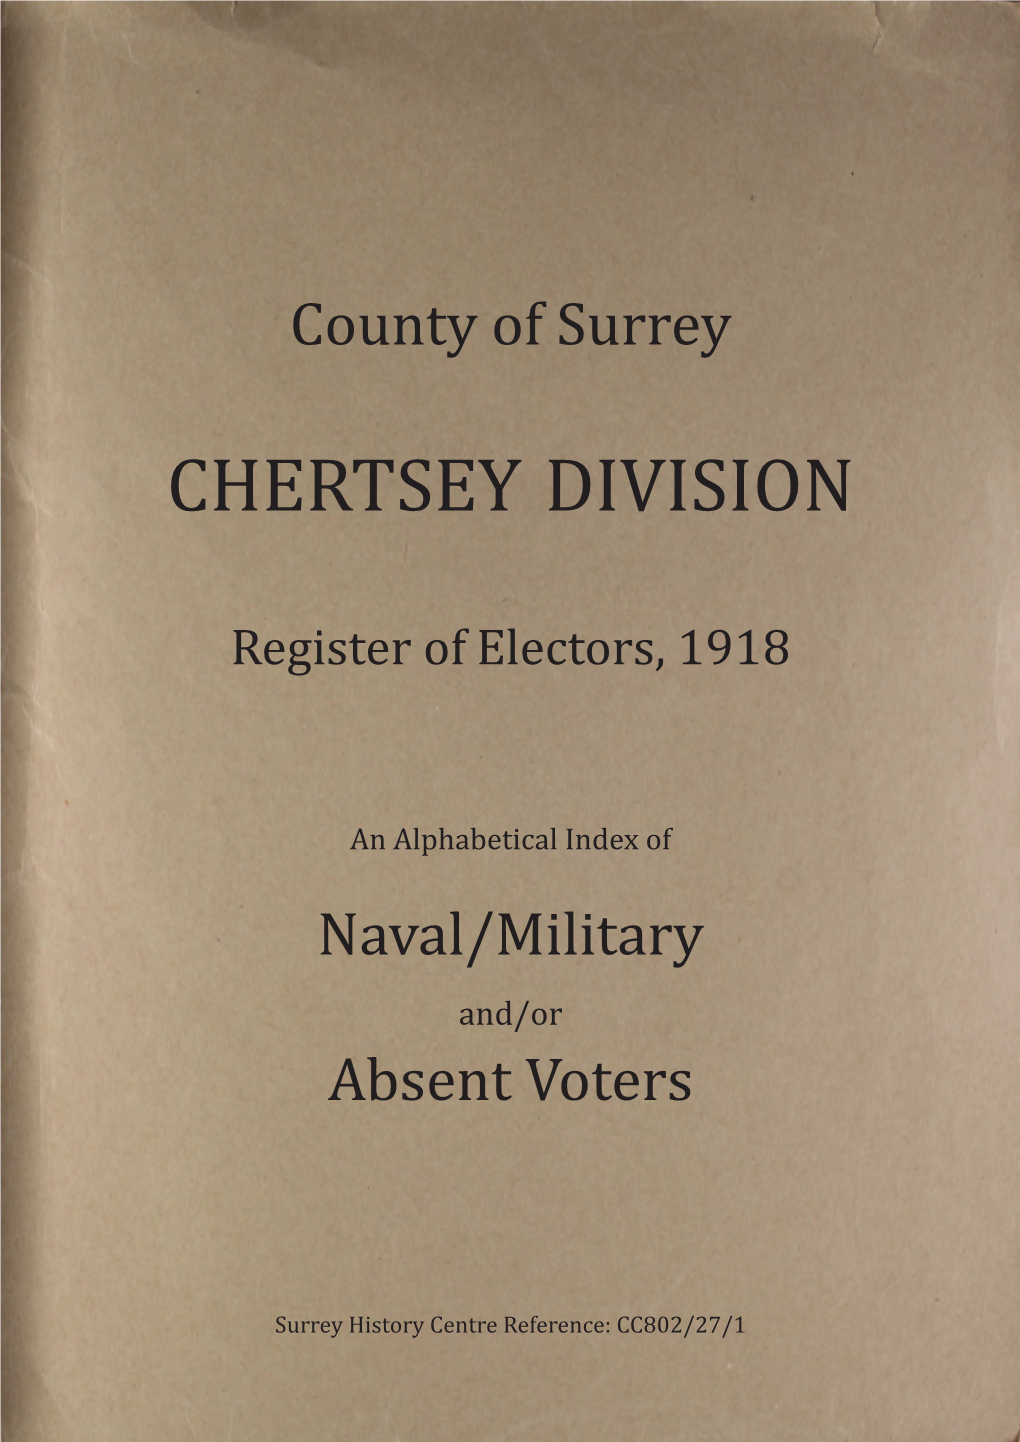 Chertsey Division